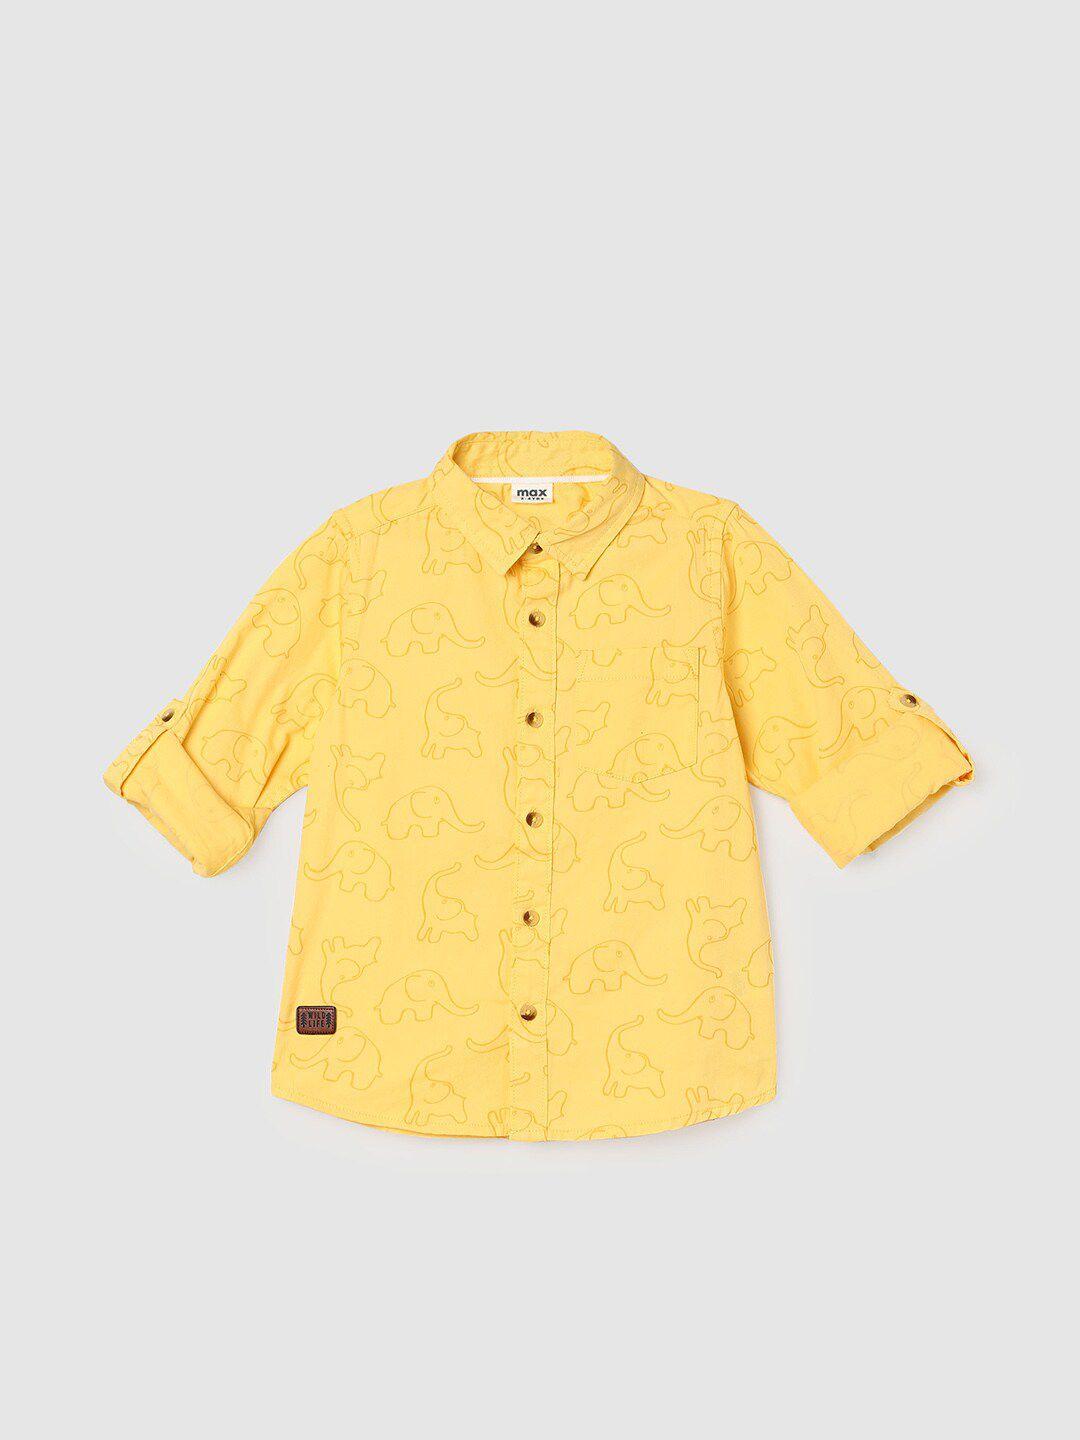 max boys conversational printed casual pure cotton shirt